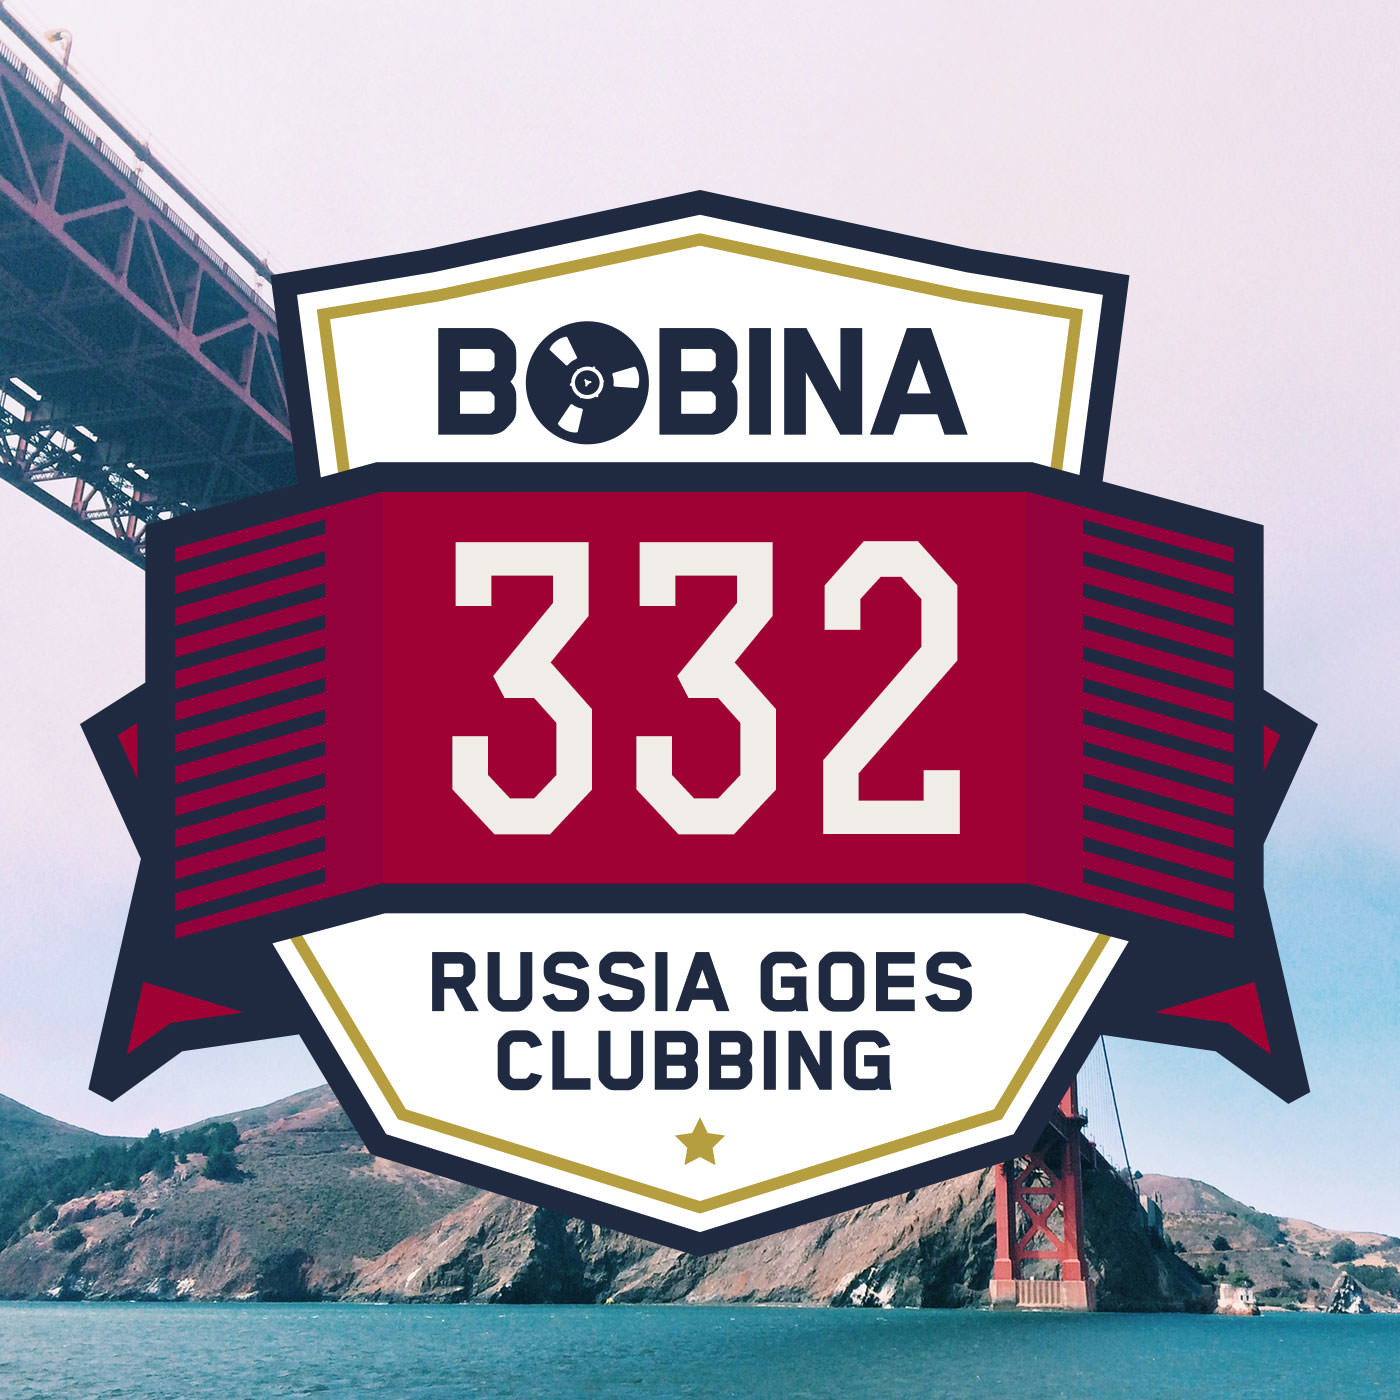 Nr. 332 Russia Goes Clubbing